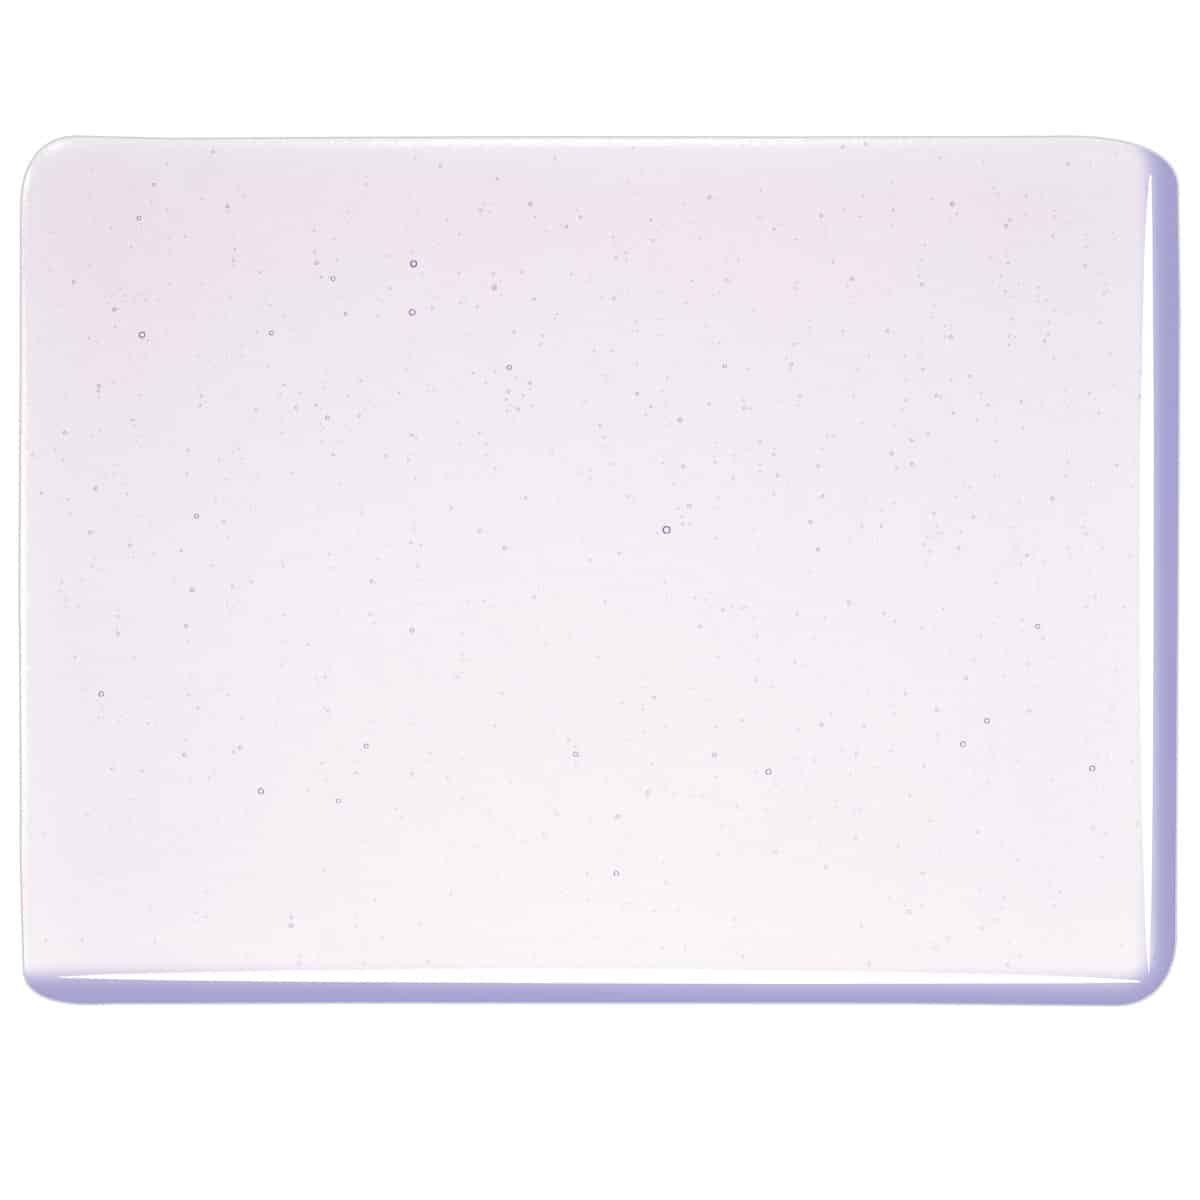 001948 Purple Blue Tint transparent sheet glass swatch